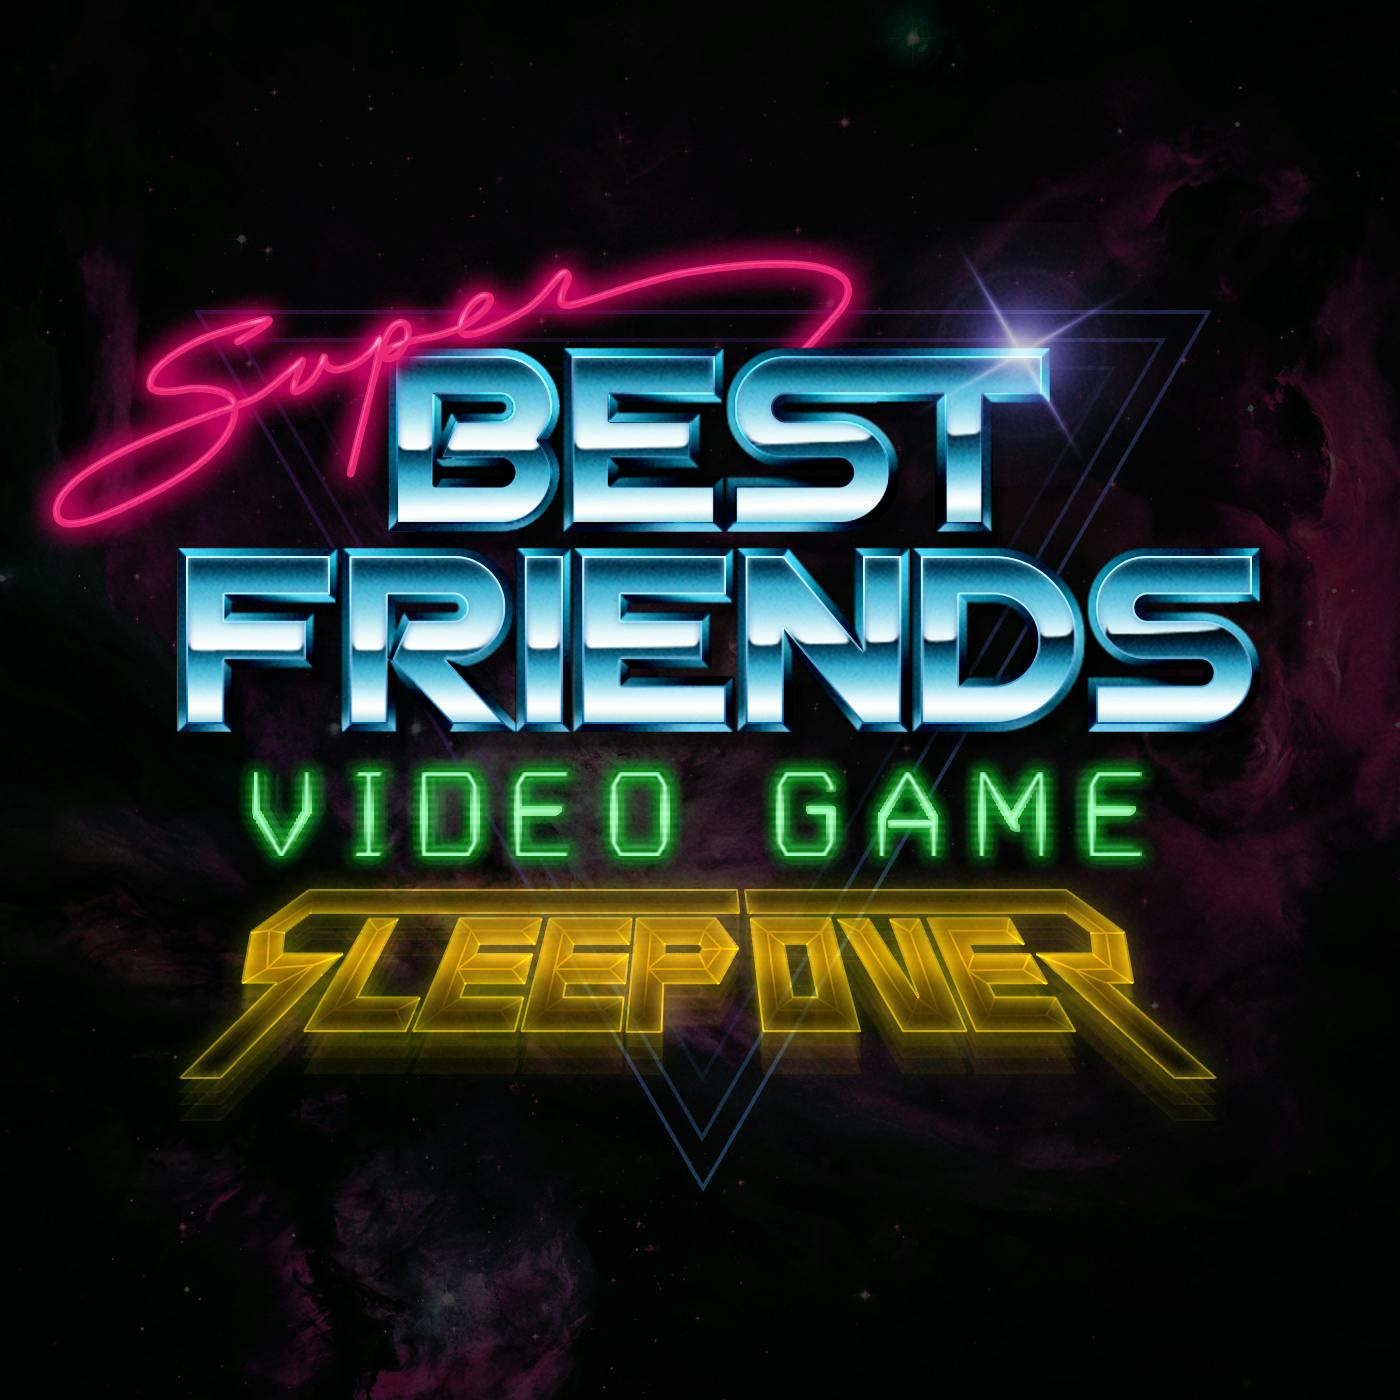 Super Best Friends Video Game Sleepover - Episode 55